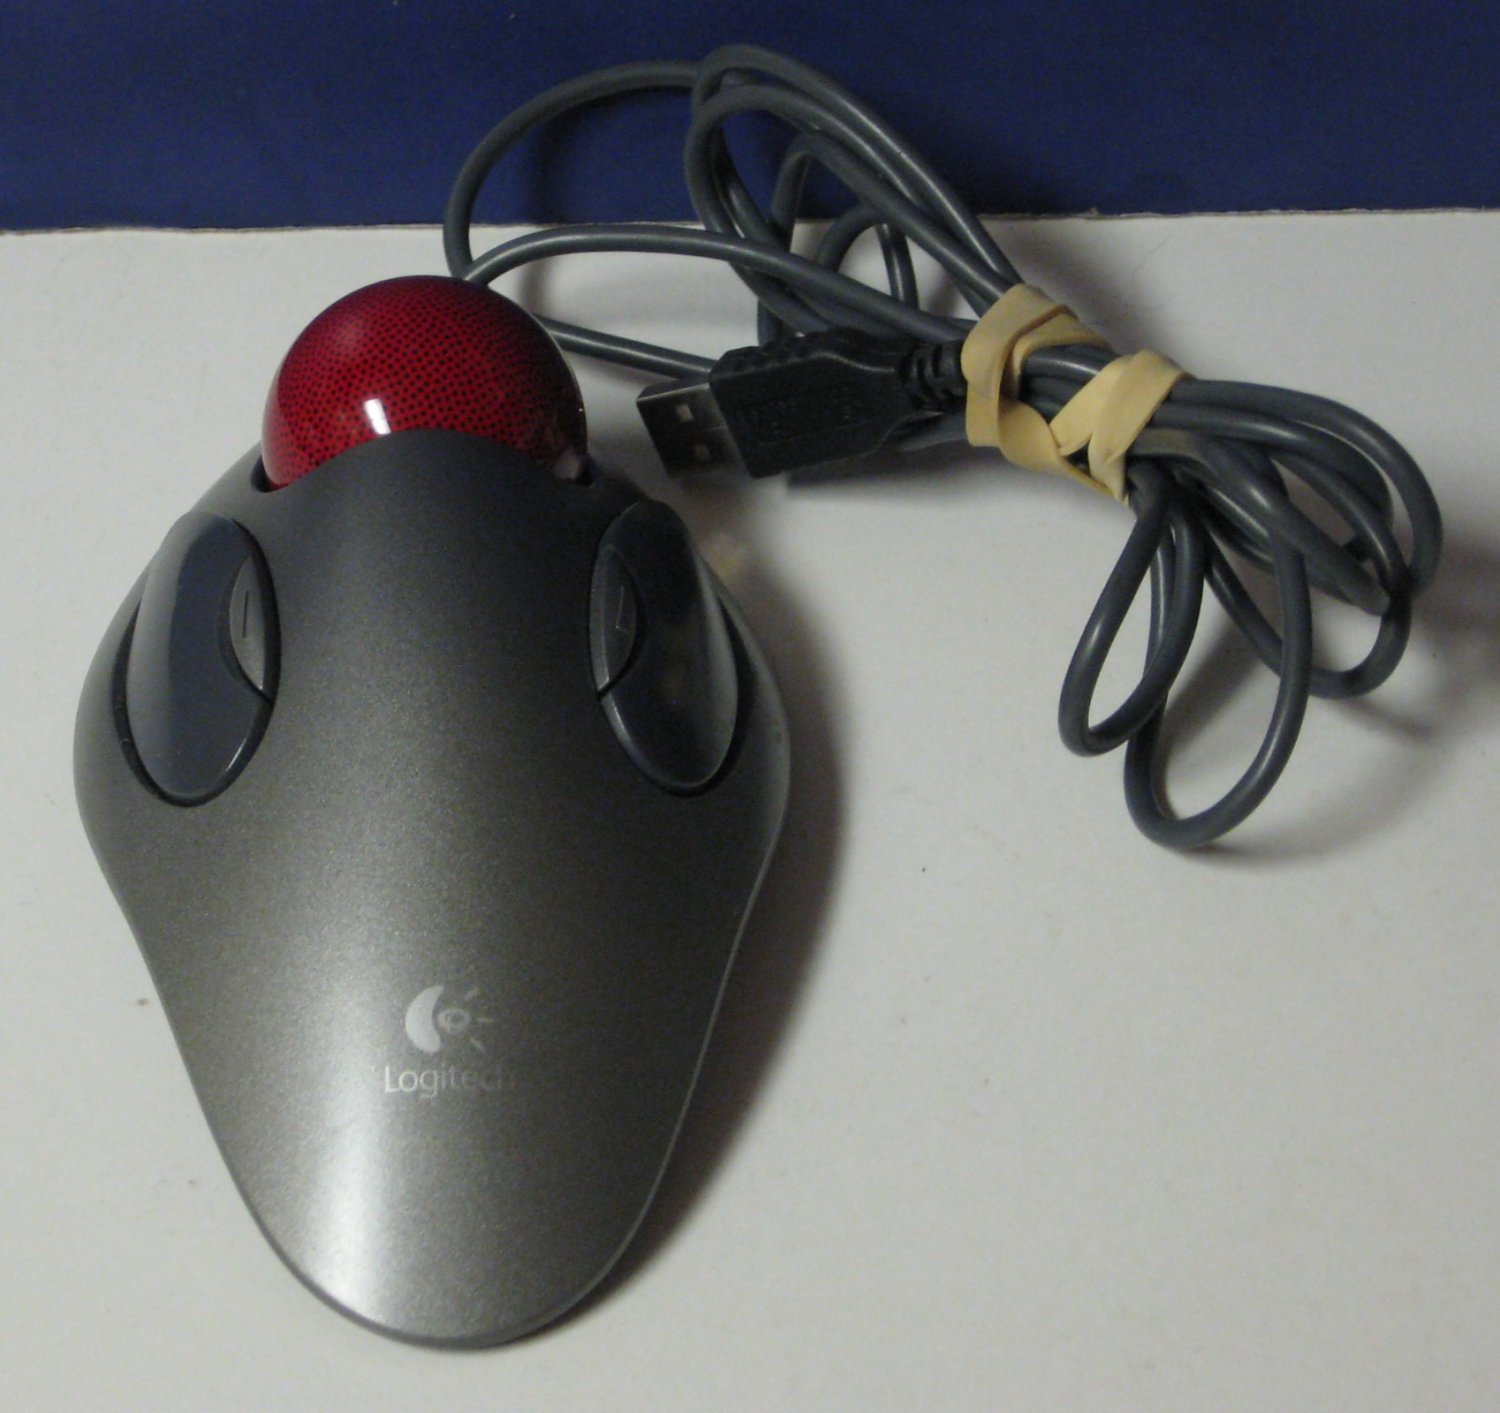 logitech trackball mouse driver windows 7